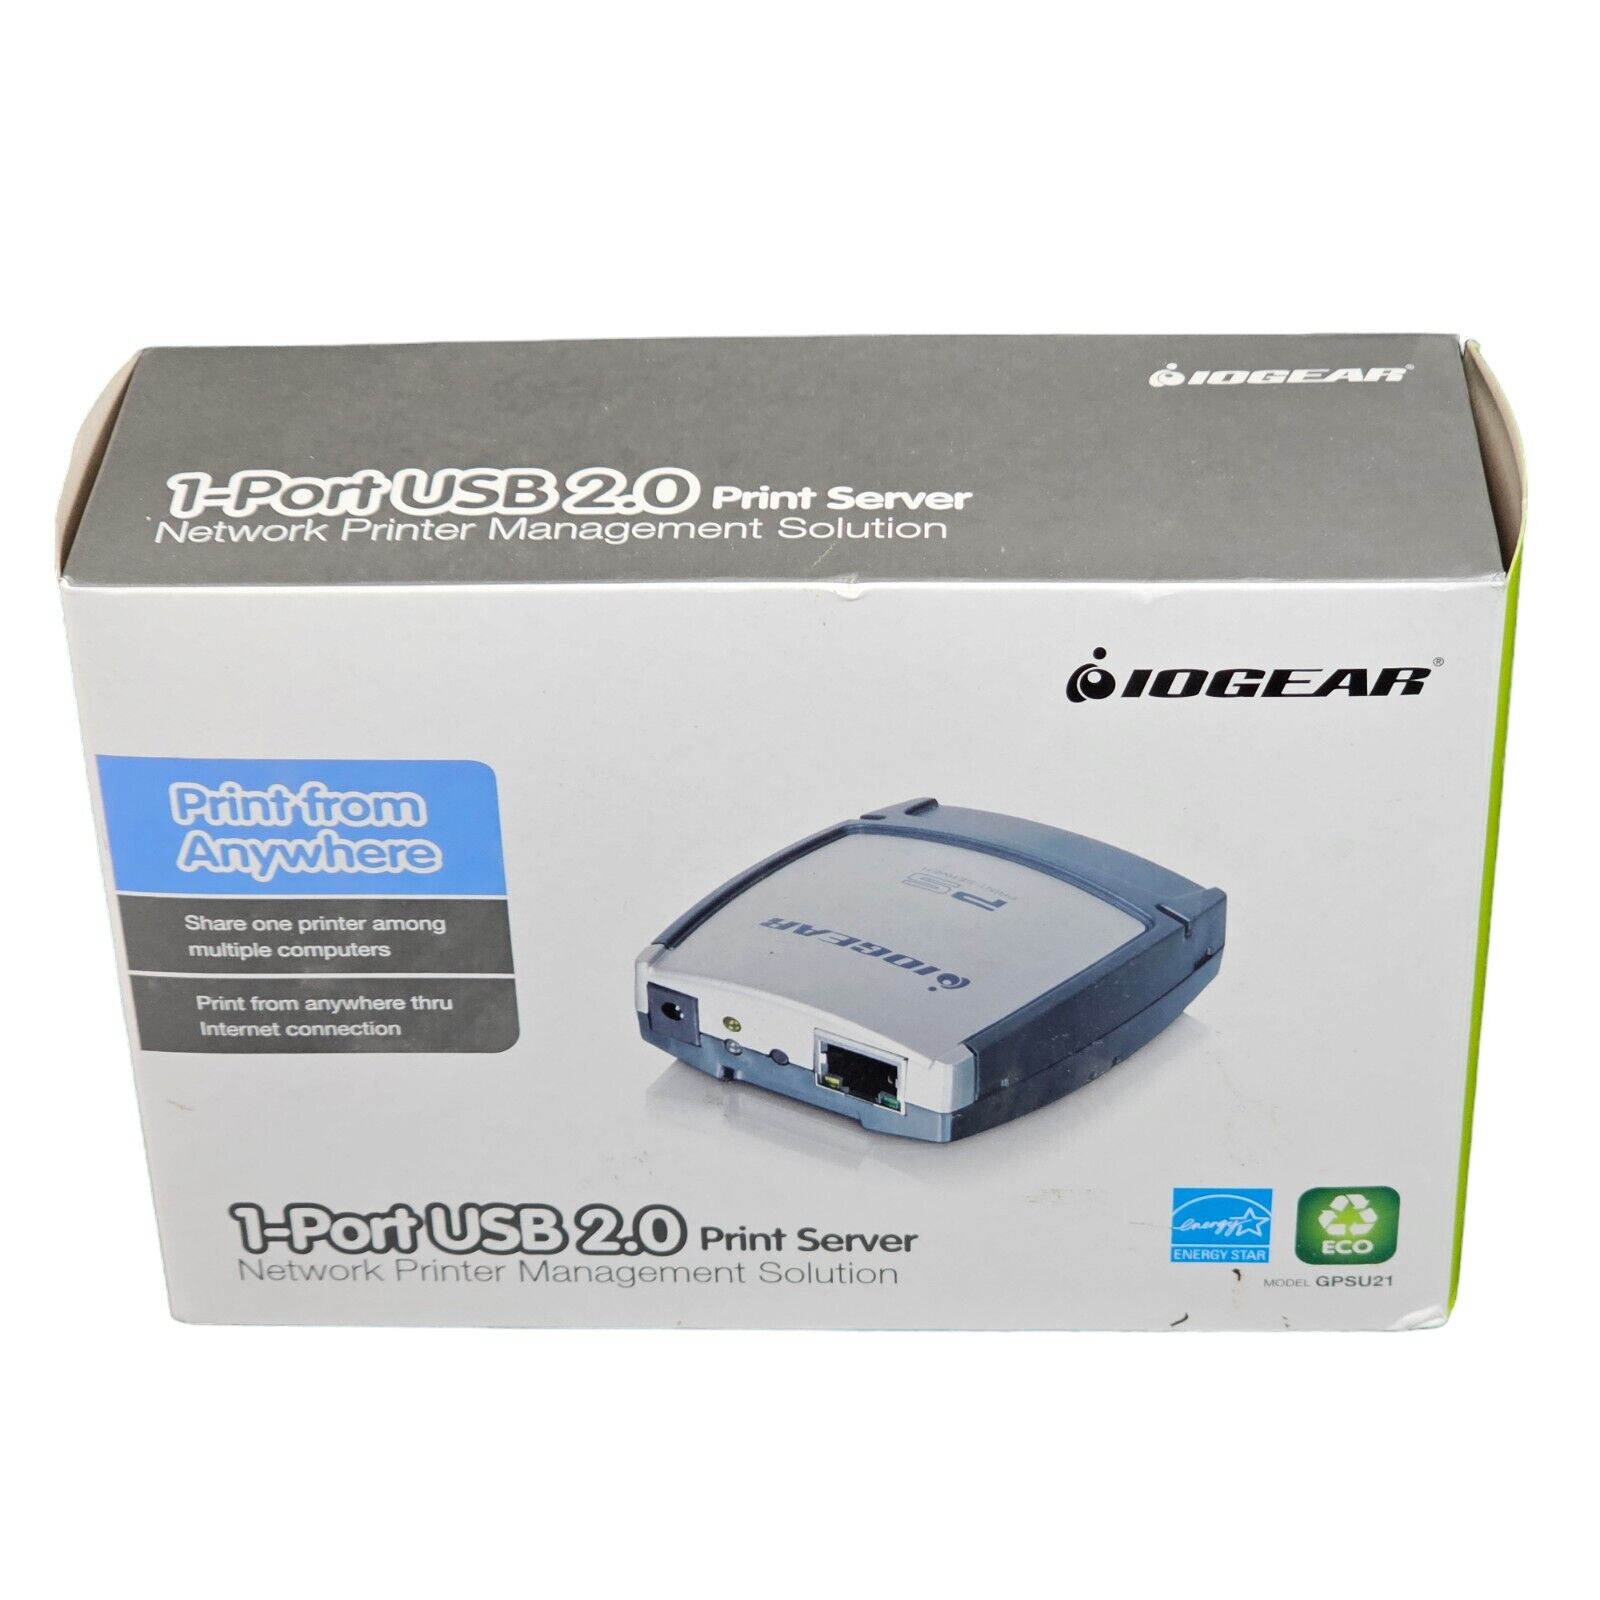 IOGEAR 1-Port USB 2.0 Print Server GPSU21